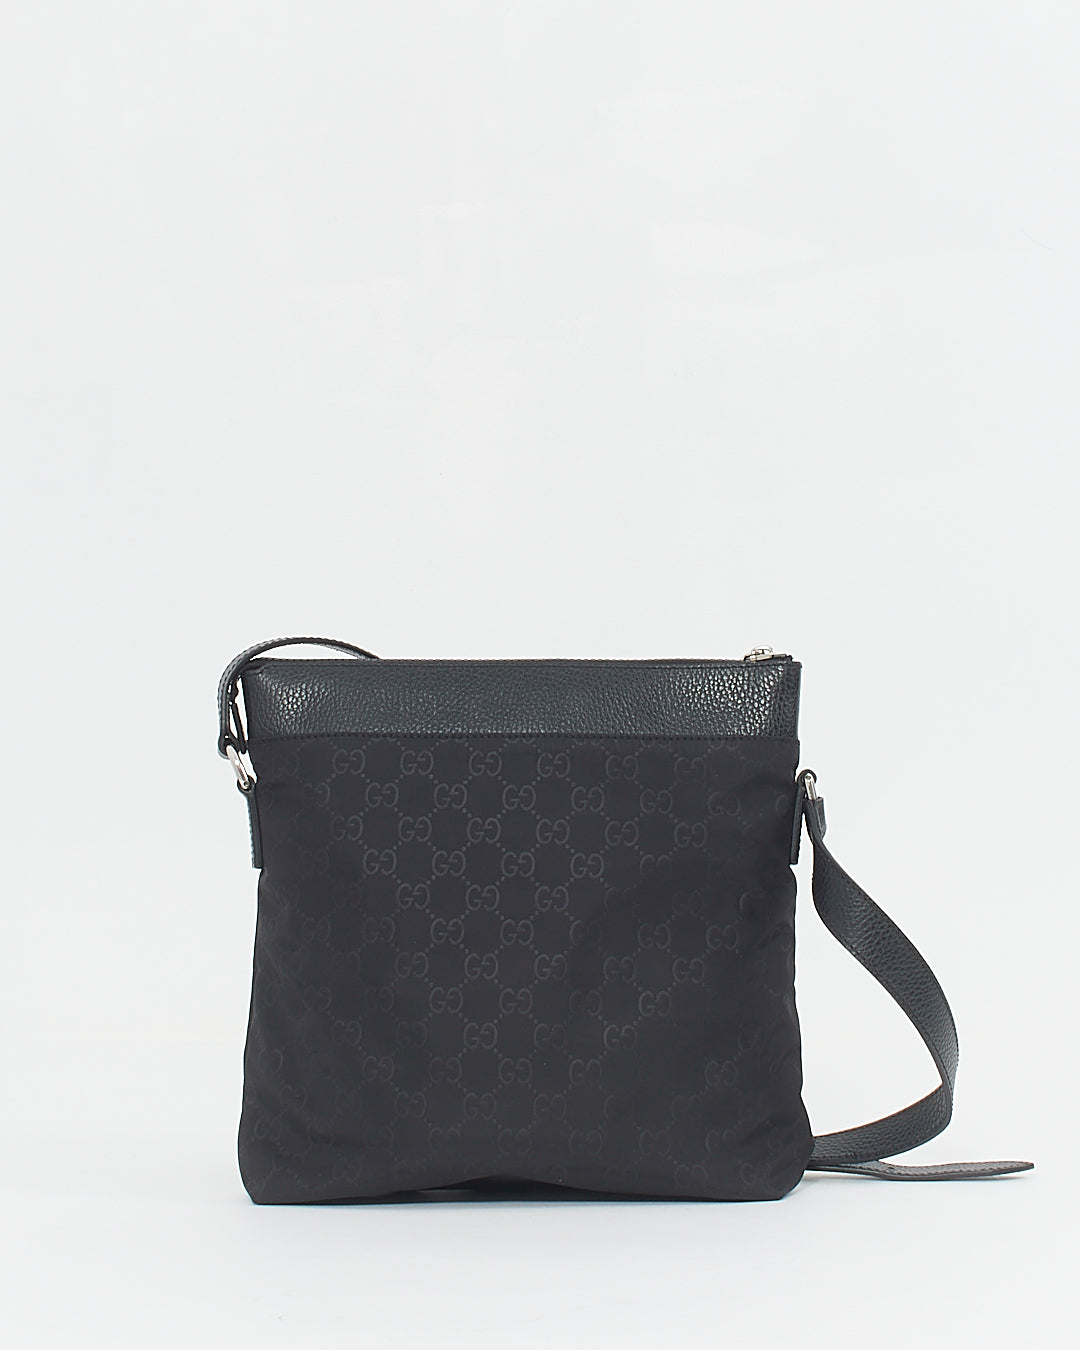 Gucci Black Nylon with Leather Trim Messenger Bag